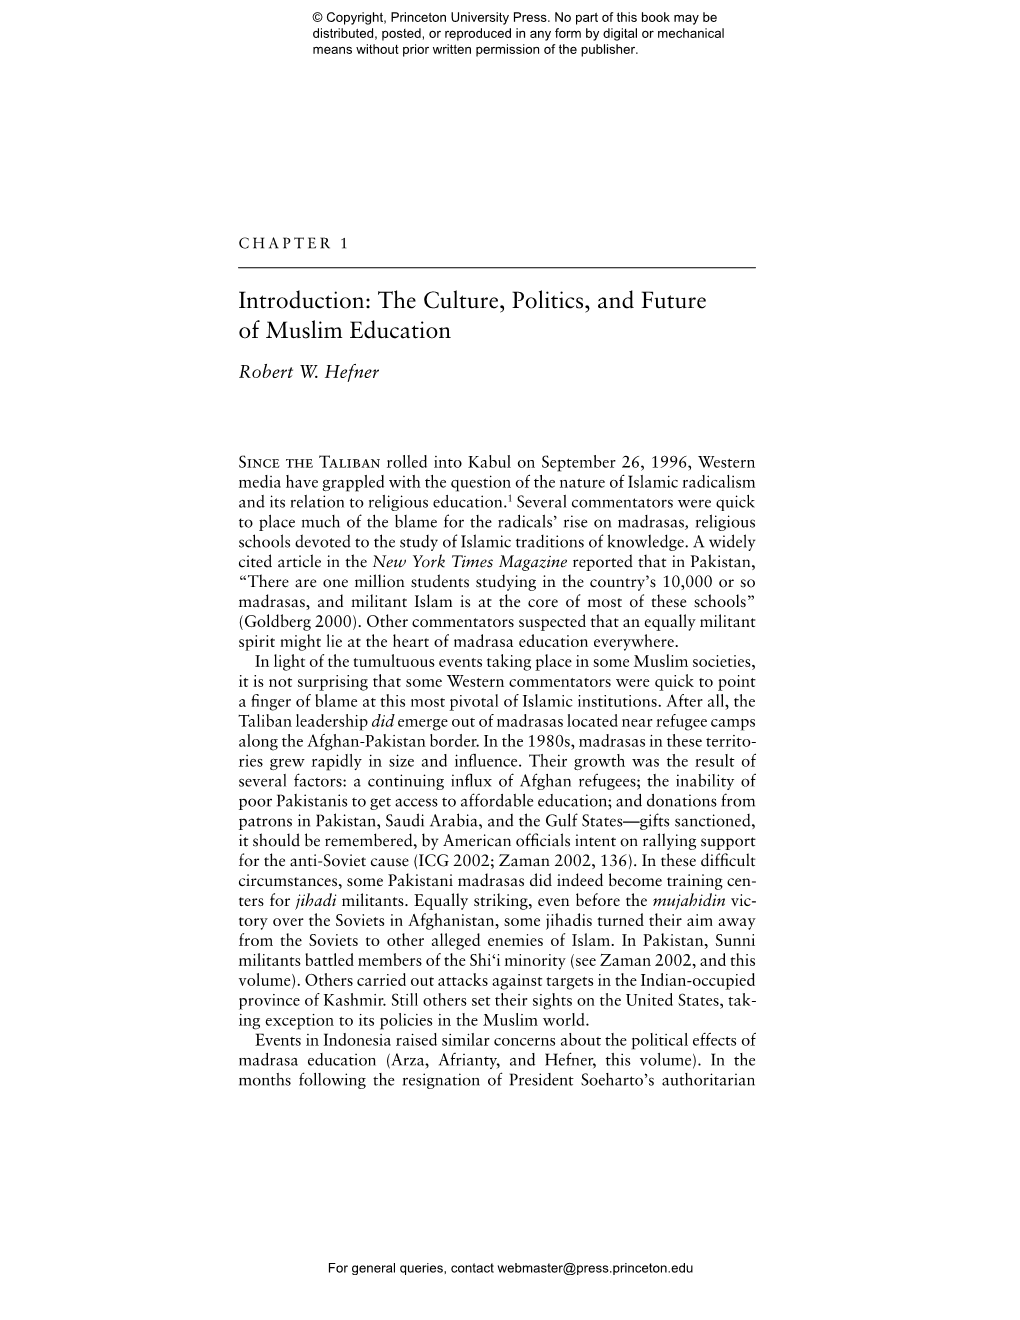 The Culture, Politics, and Future of Muslim Education